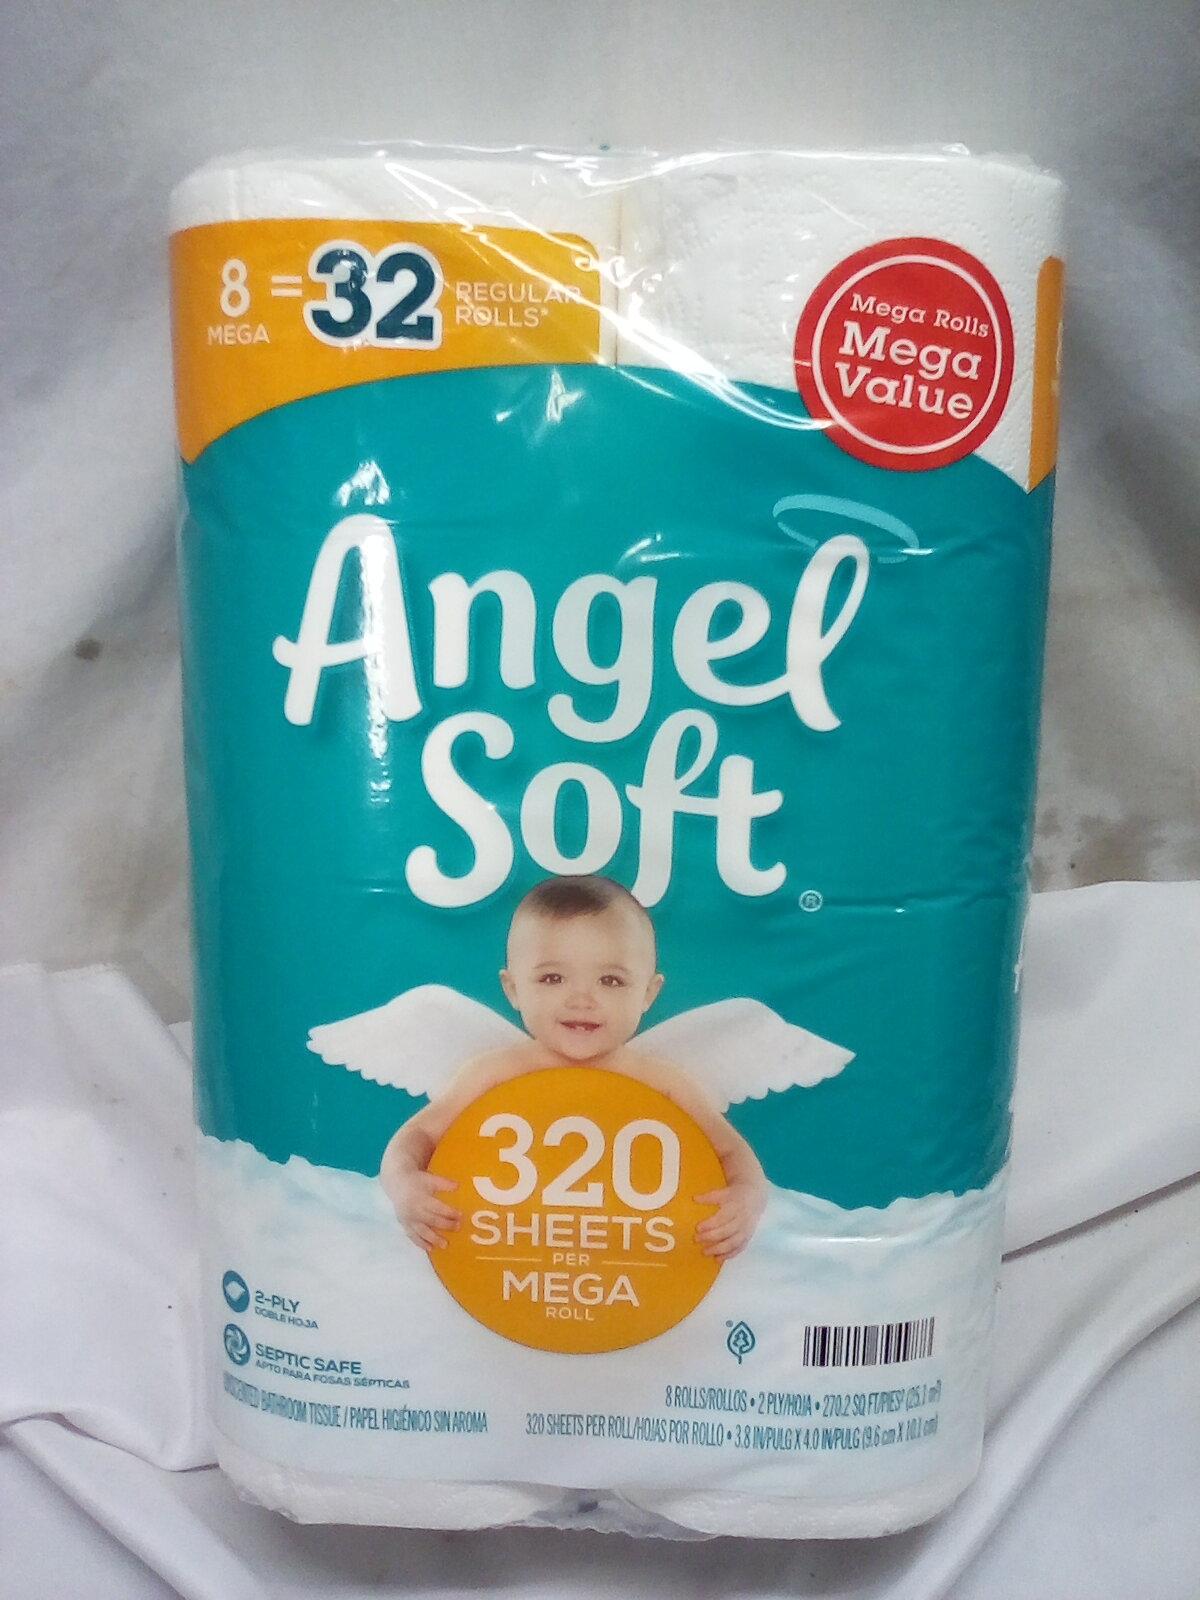 Angel Soft Mega Value Rolls. 8 rolls